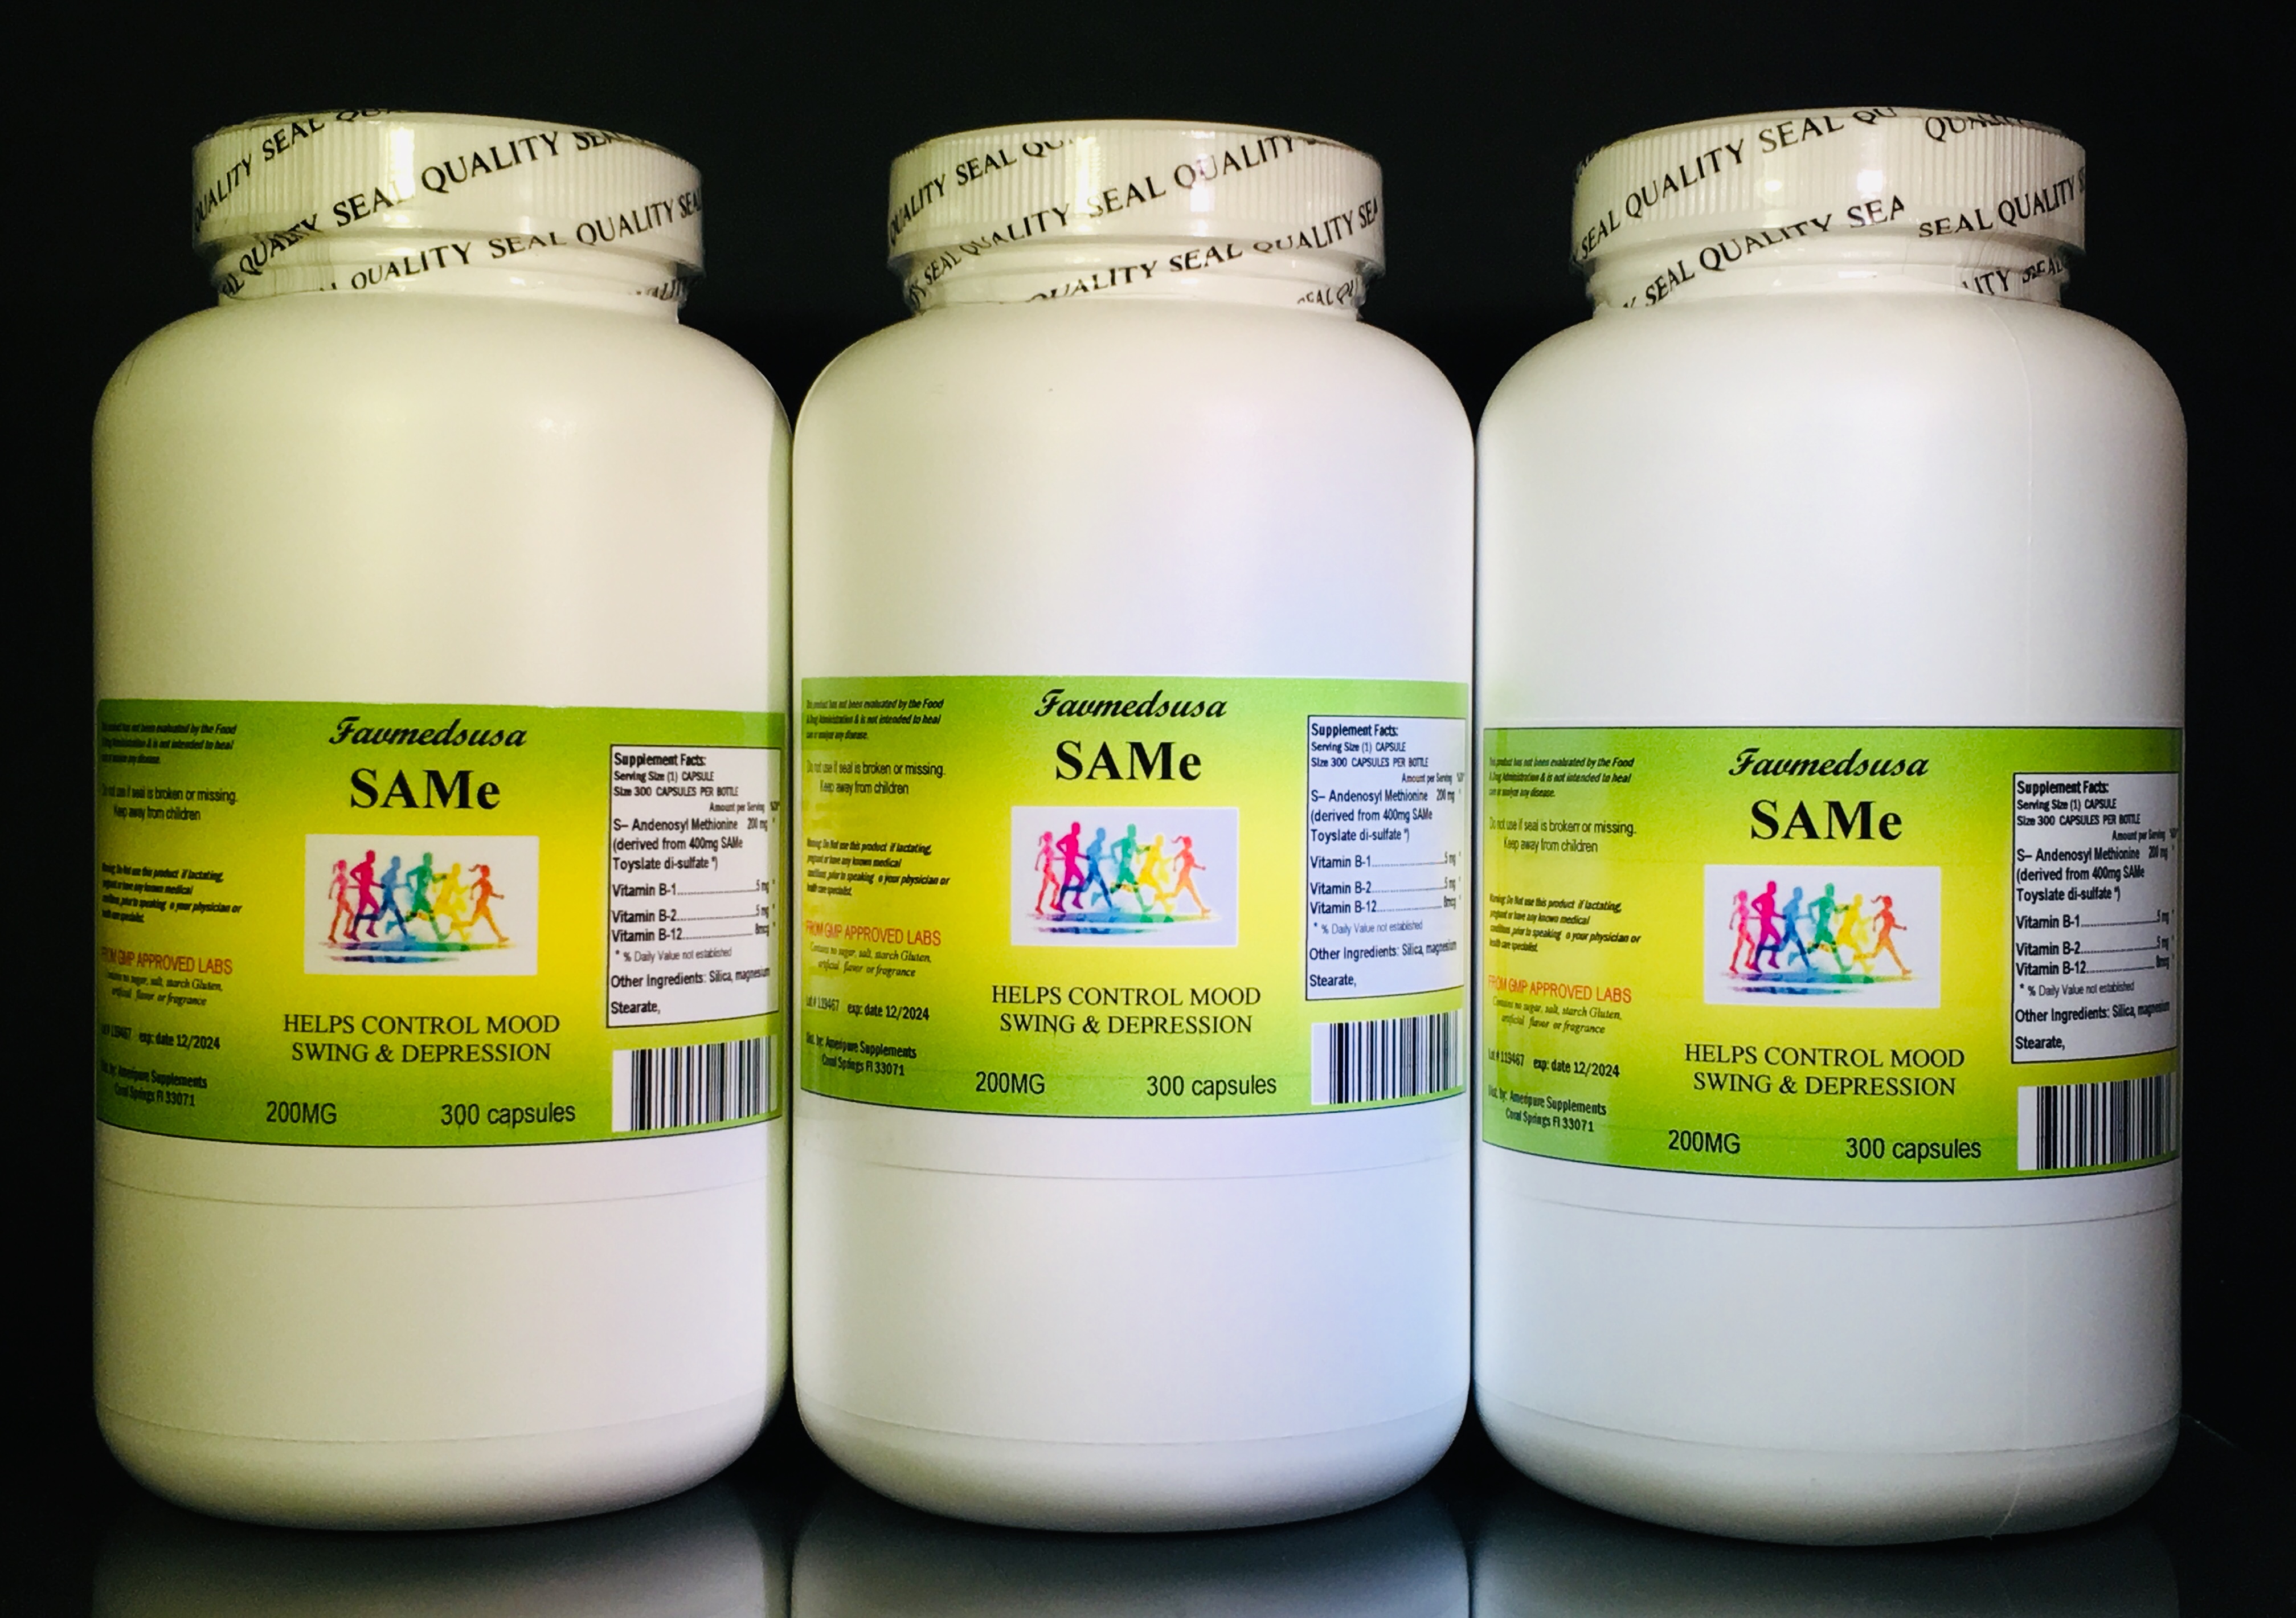 SAM-e 200mg - 900 (3x300) capsules